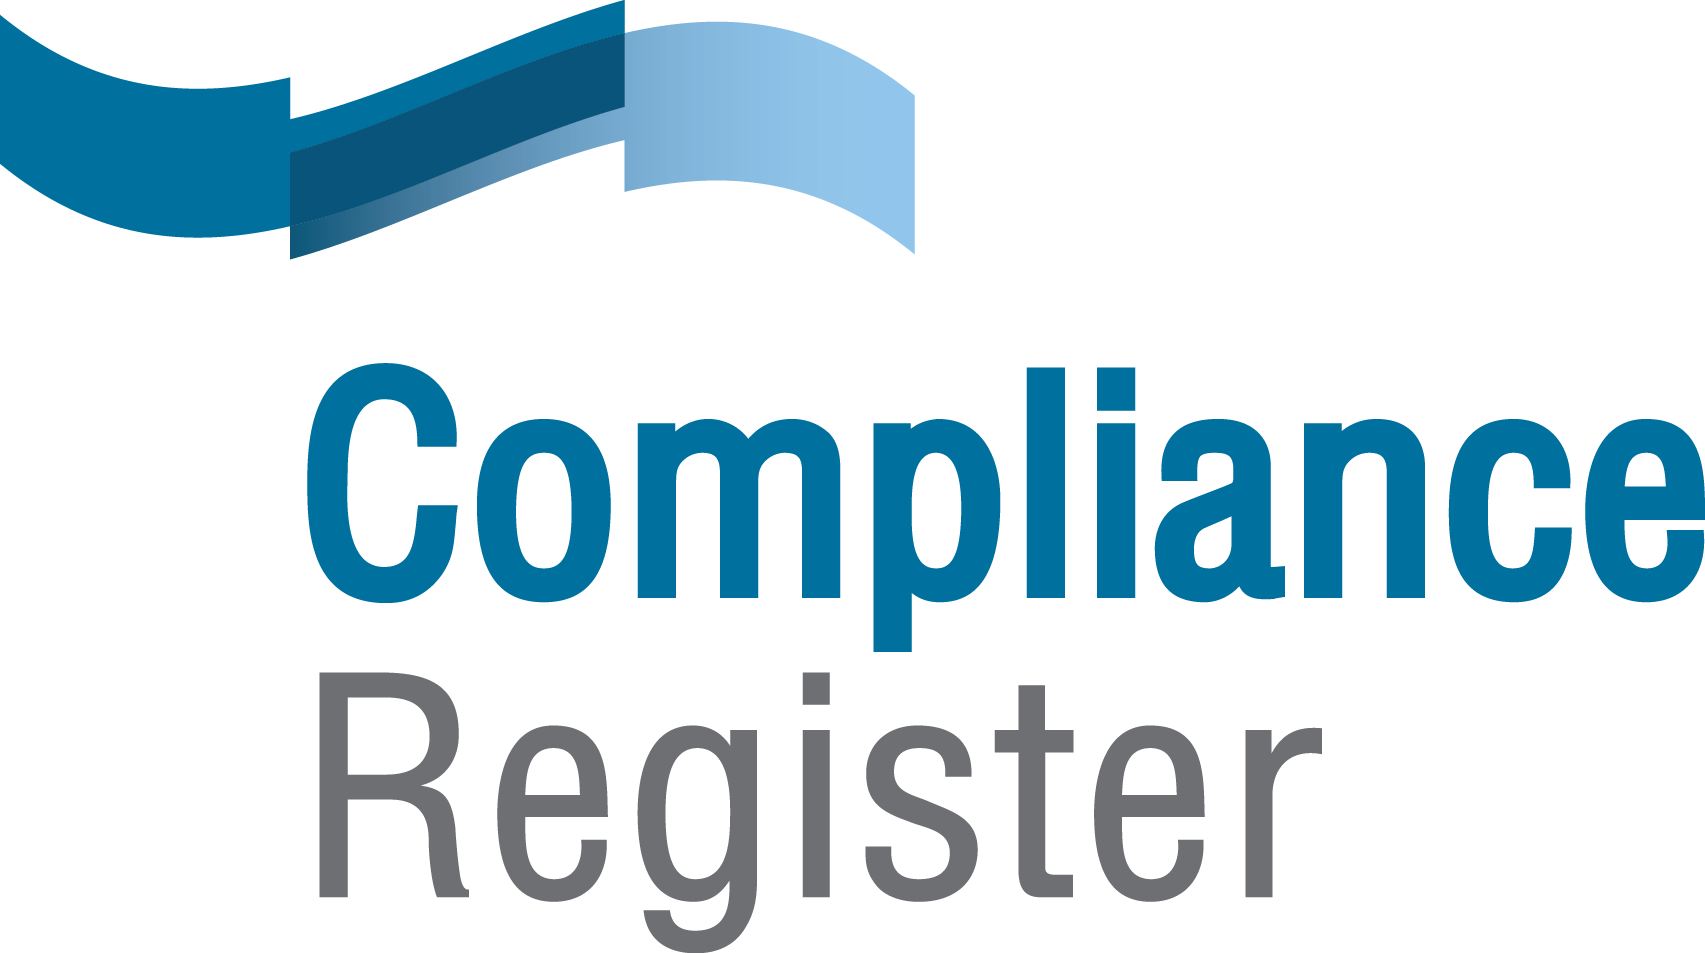 Environment Essentials - HSE Legal Compliance Register Software Within legal compliance register template